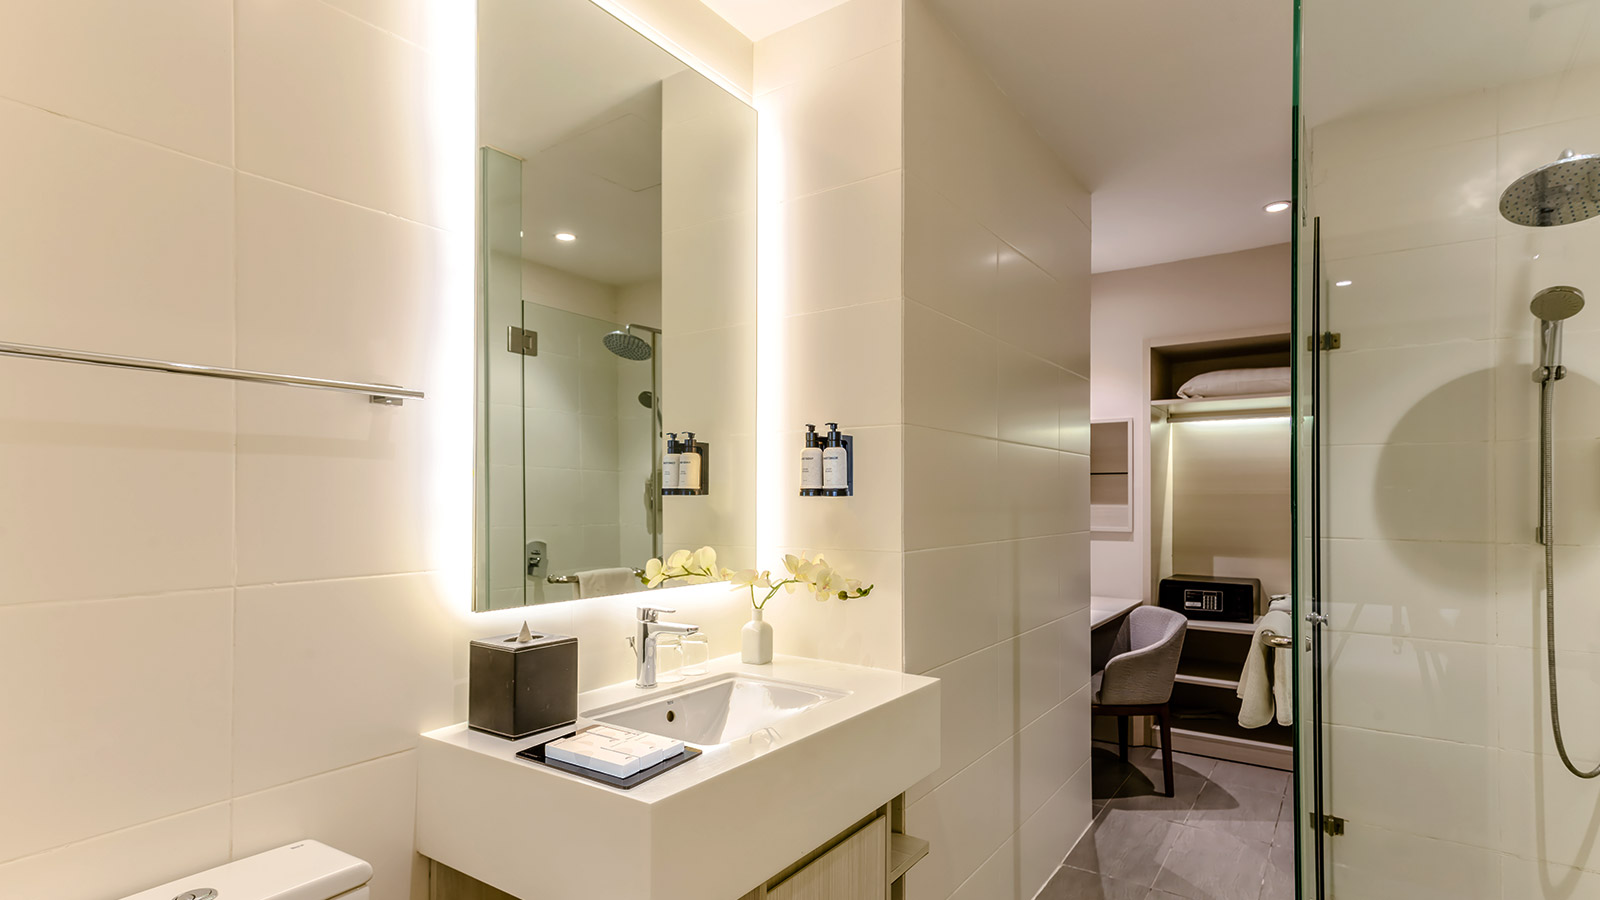 Shama Suasana Johor Bahru - Executive One Bedroom Suite Bathroom - Shama Suasana Johor Bahru